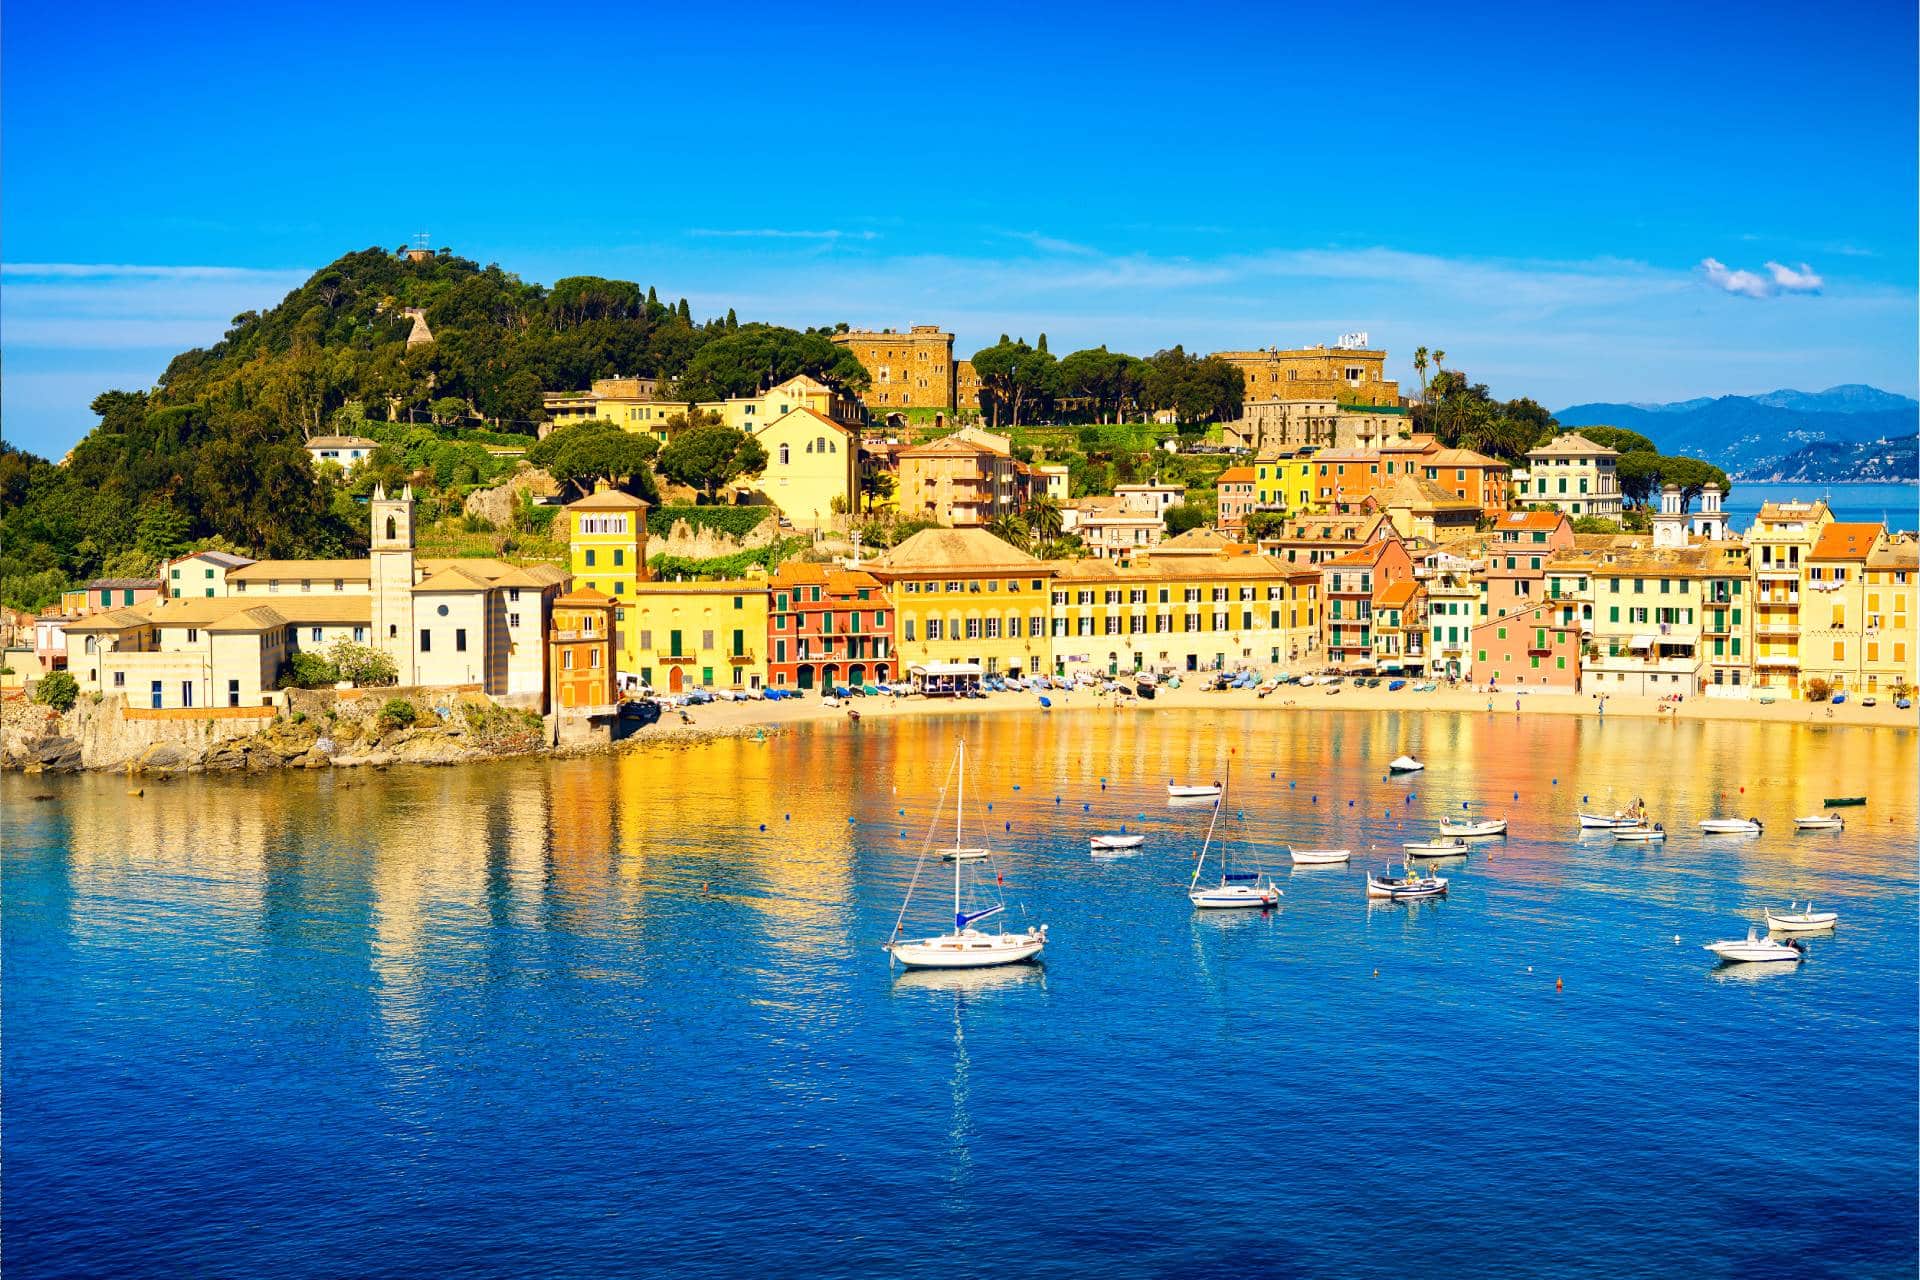 Vacanze con bambini - Gite in Liguria - Vacanze marine